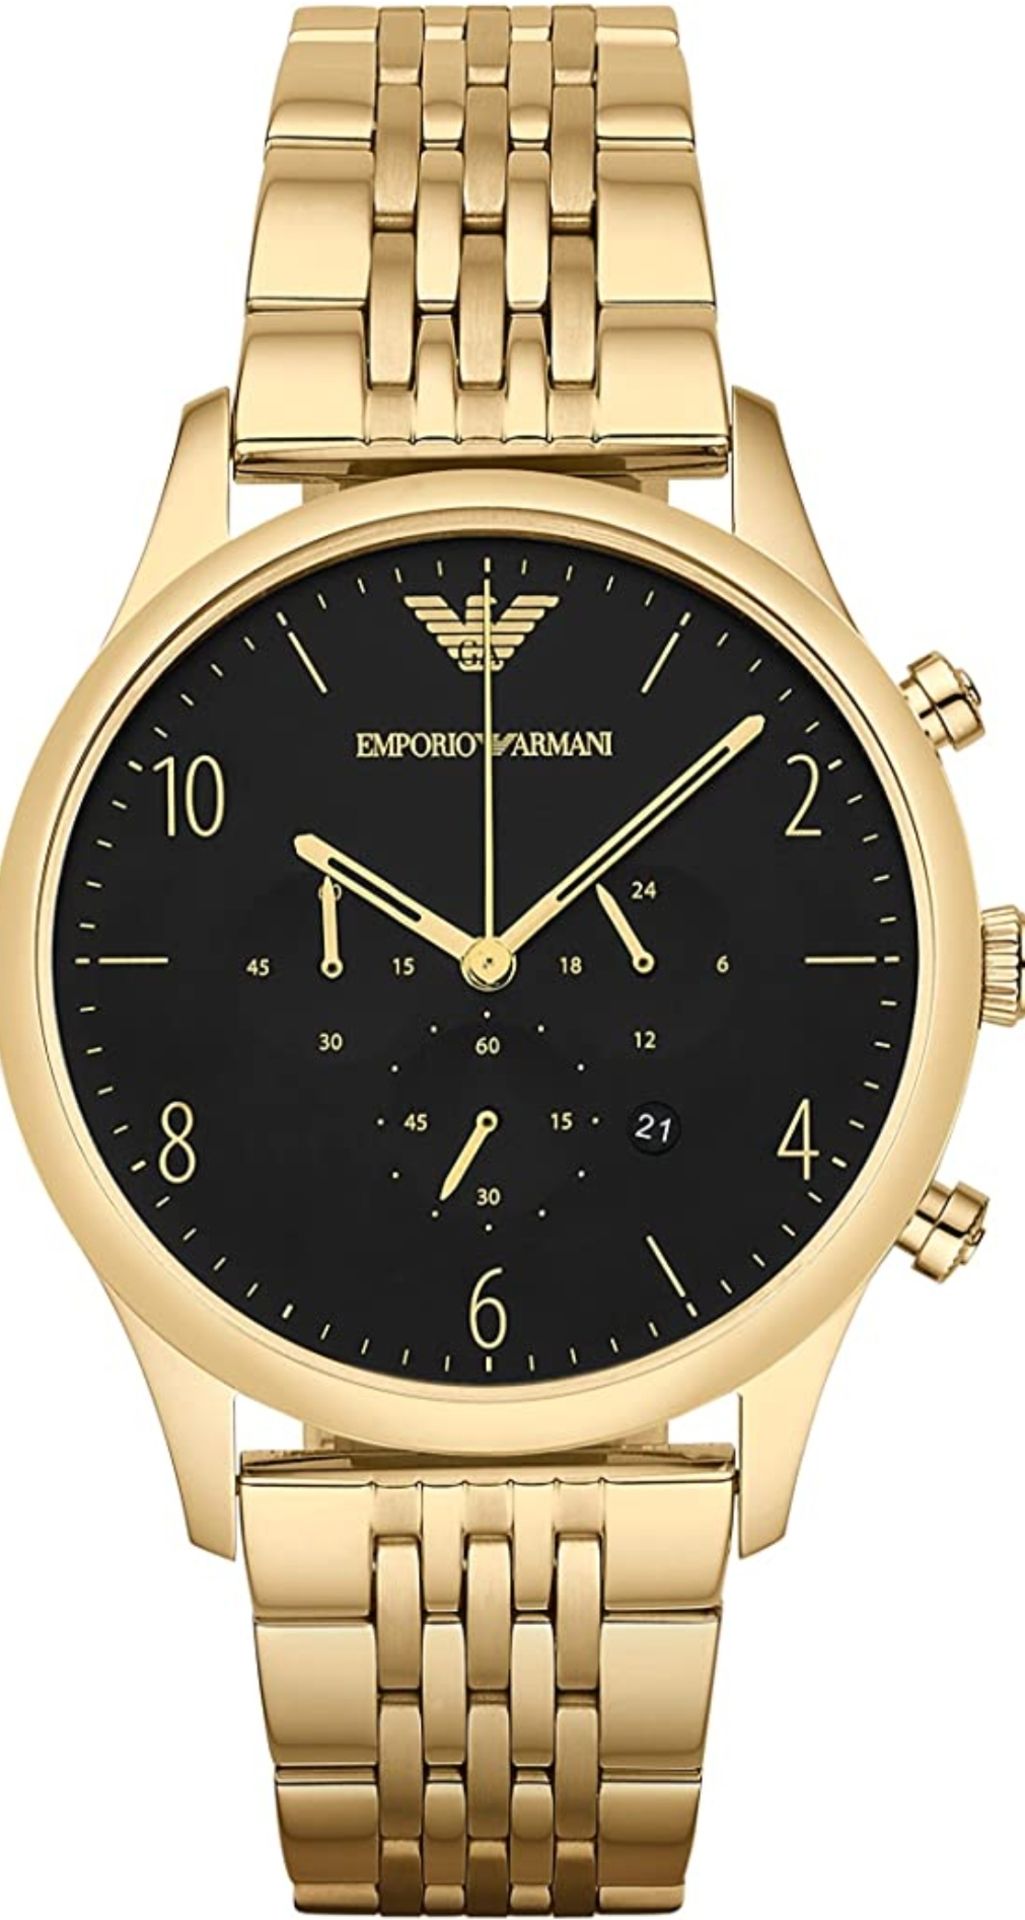 Emporio Armani AR1893 Men's Black Dial Gold Tone Bracelet Quartz Chronograph Watch - Image 4 of 8